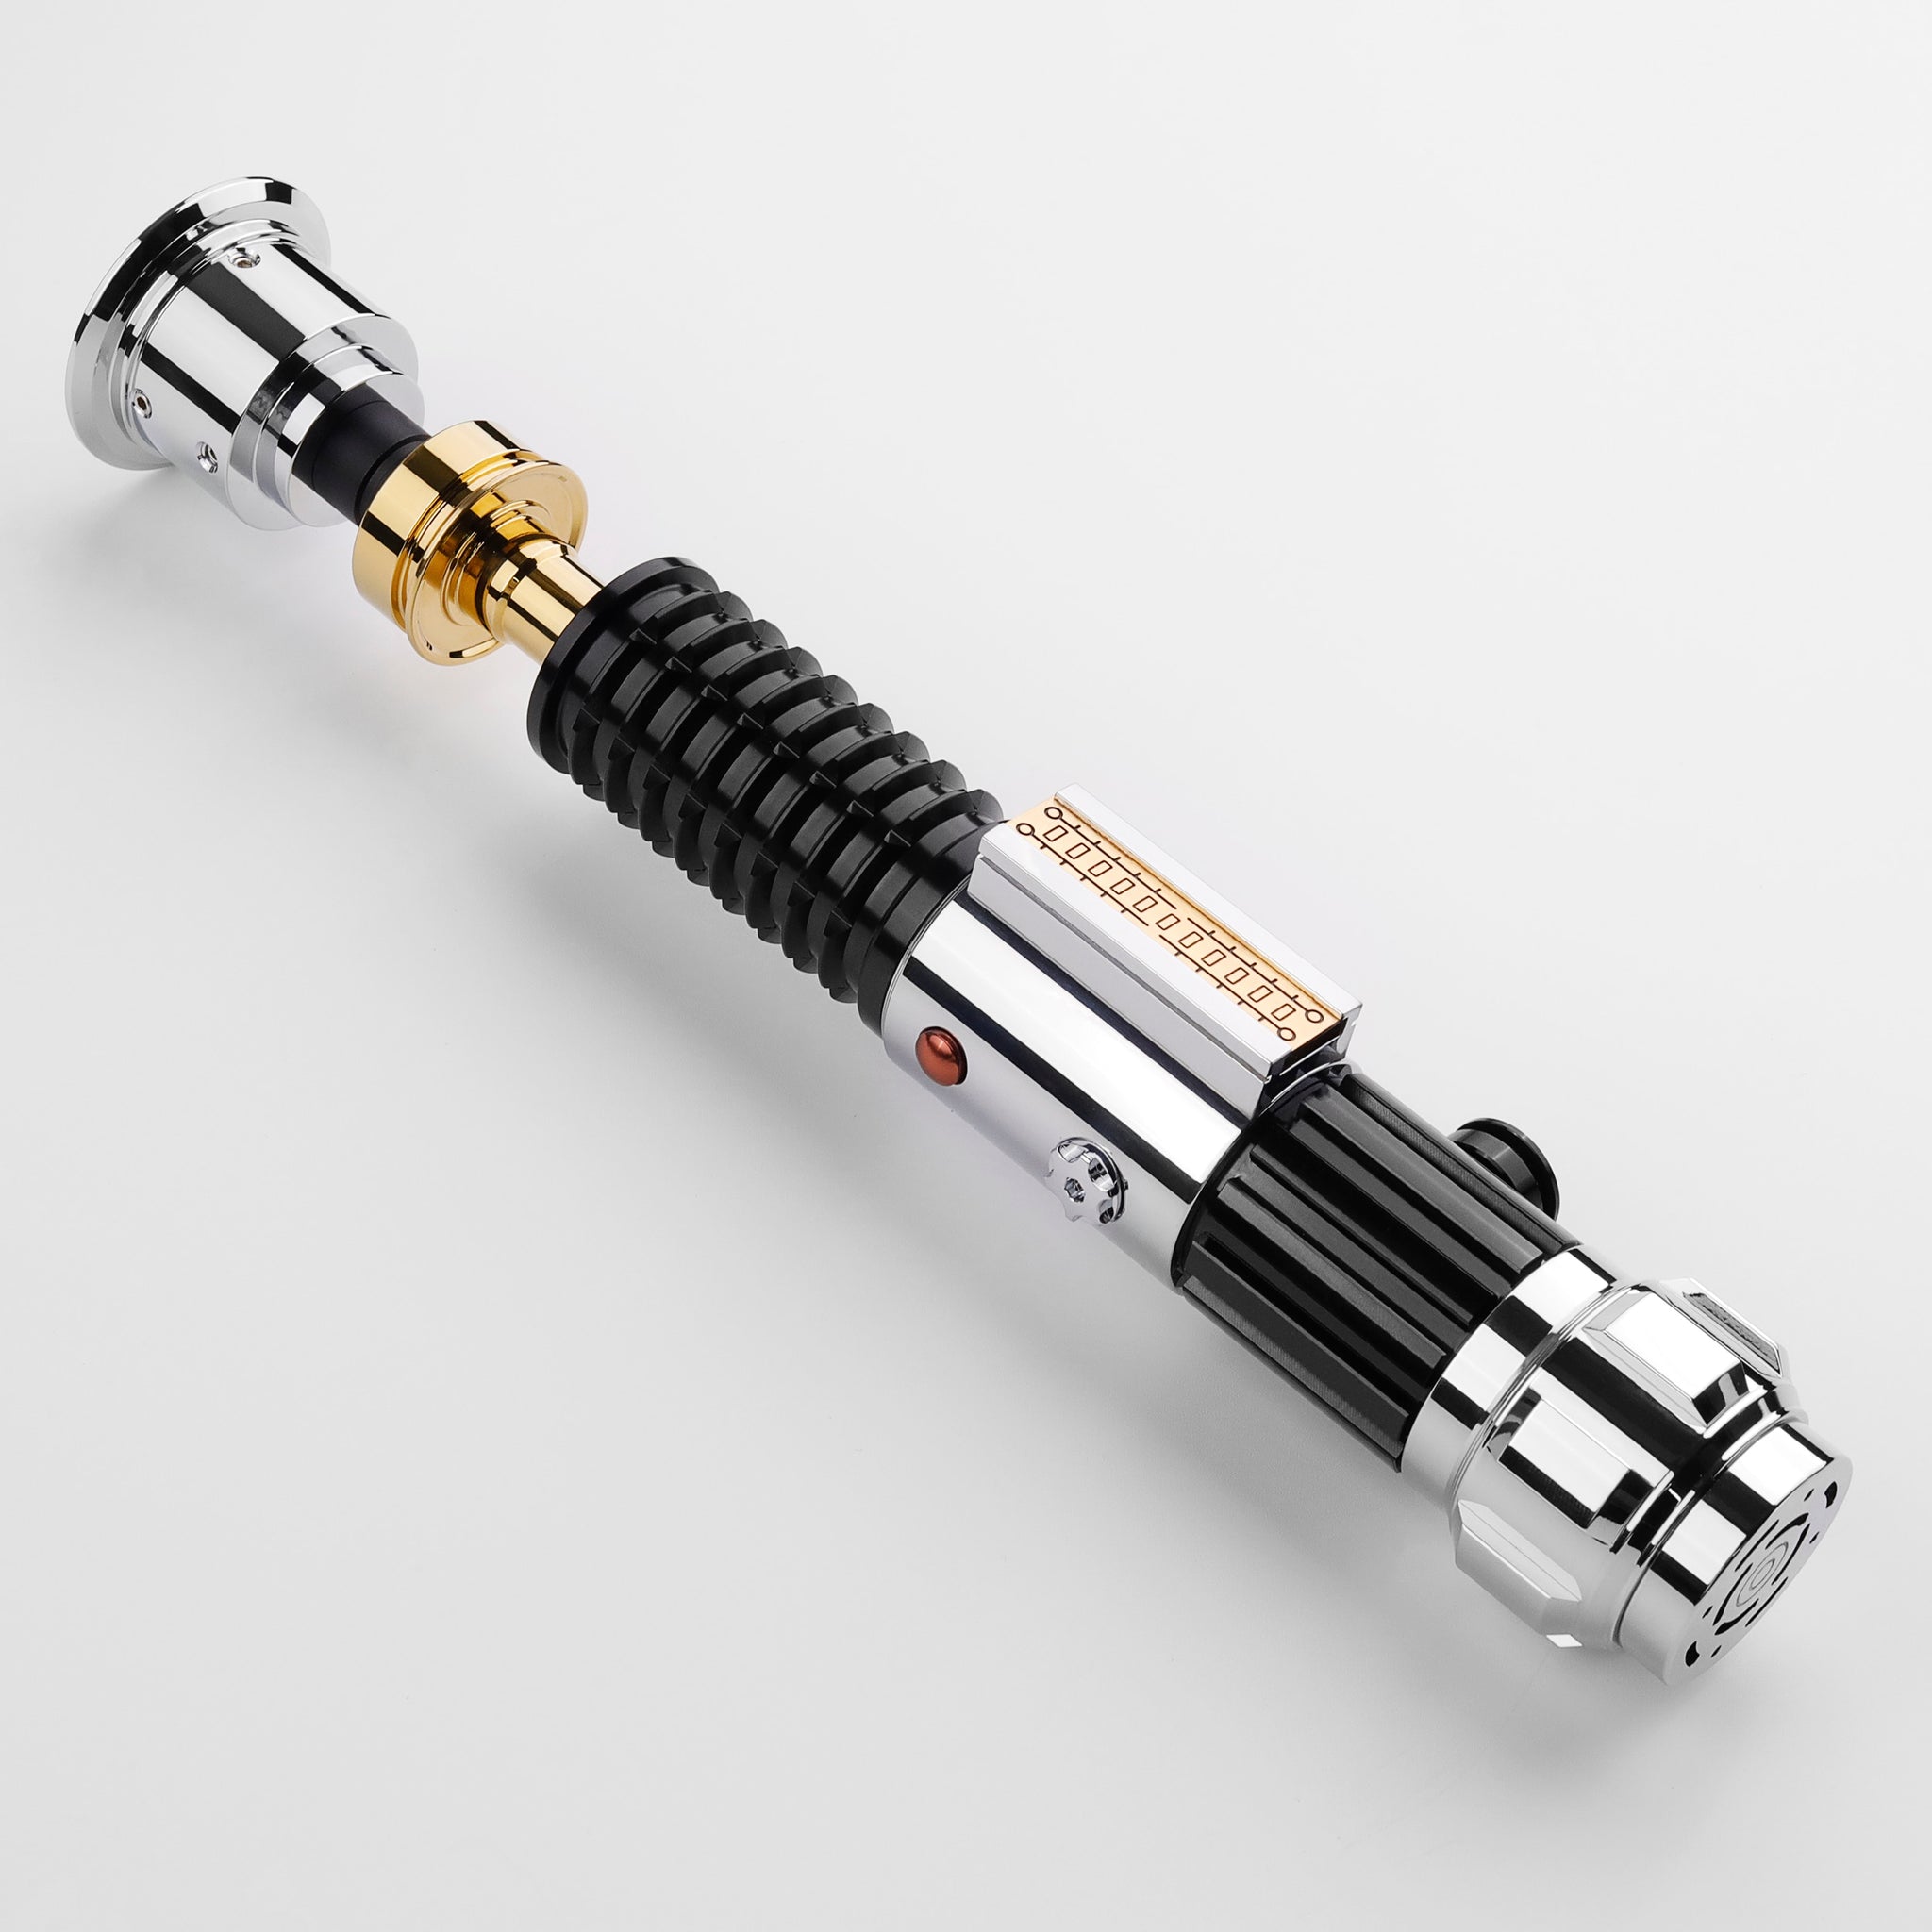 Sabre laser électronique personnalisable Obi-Wan Kenobi - Star